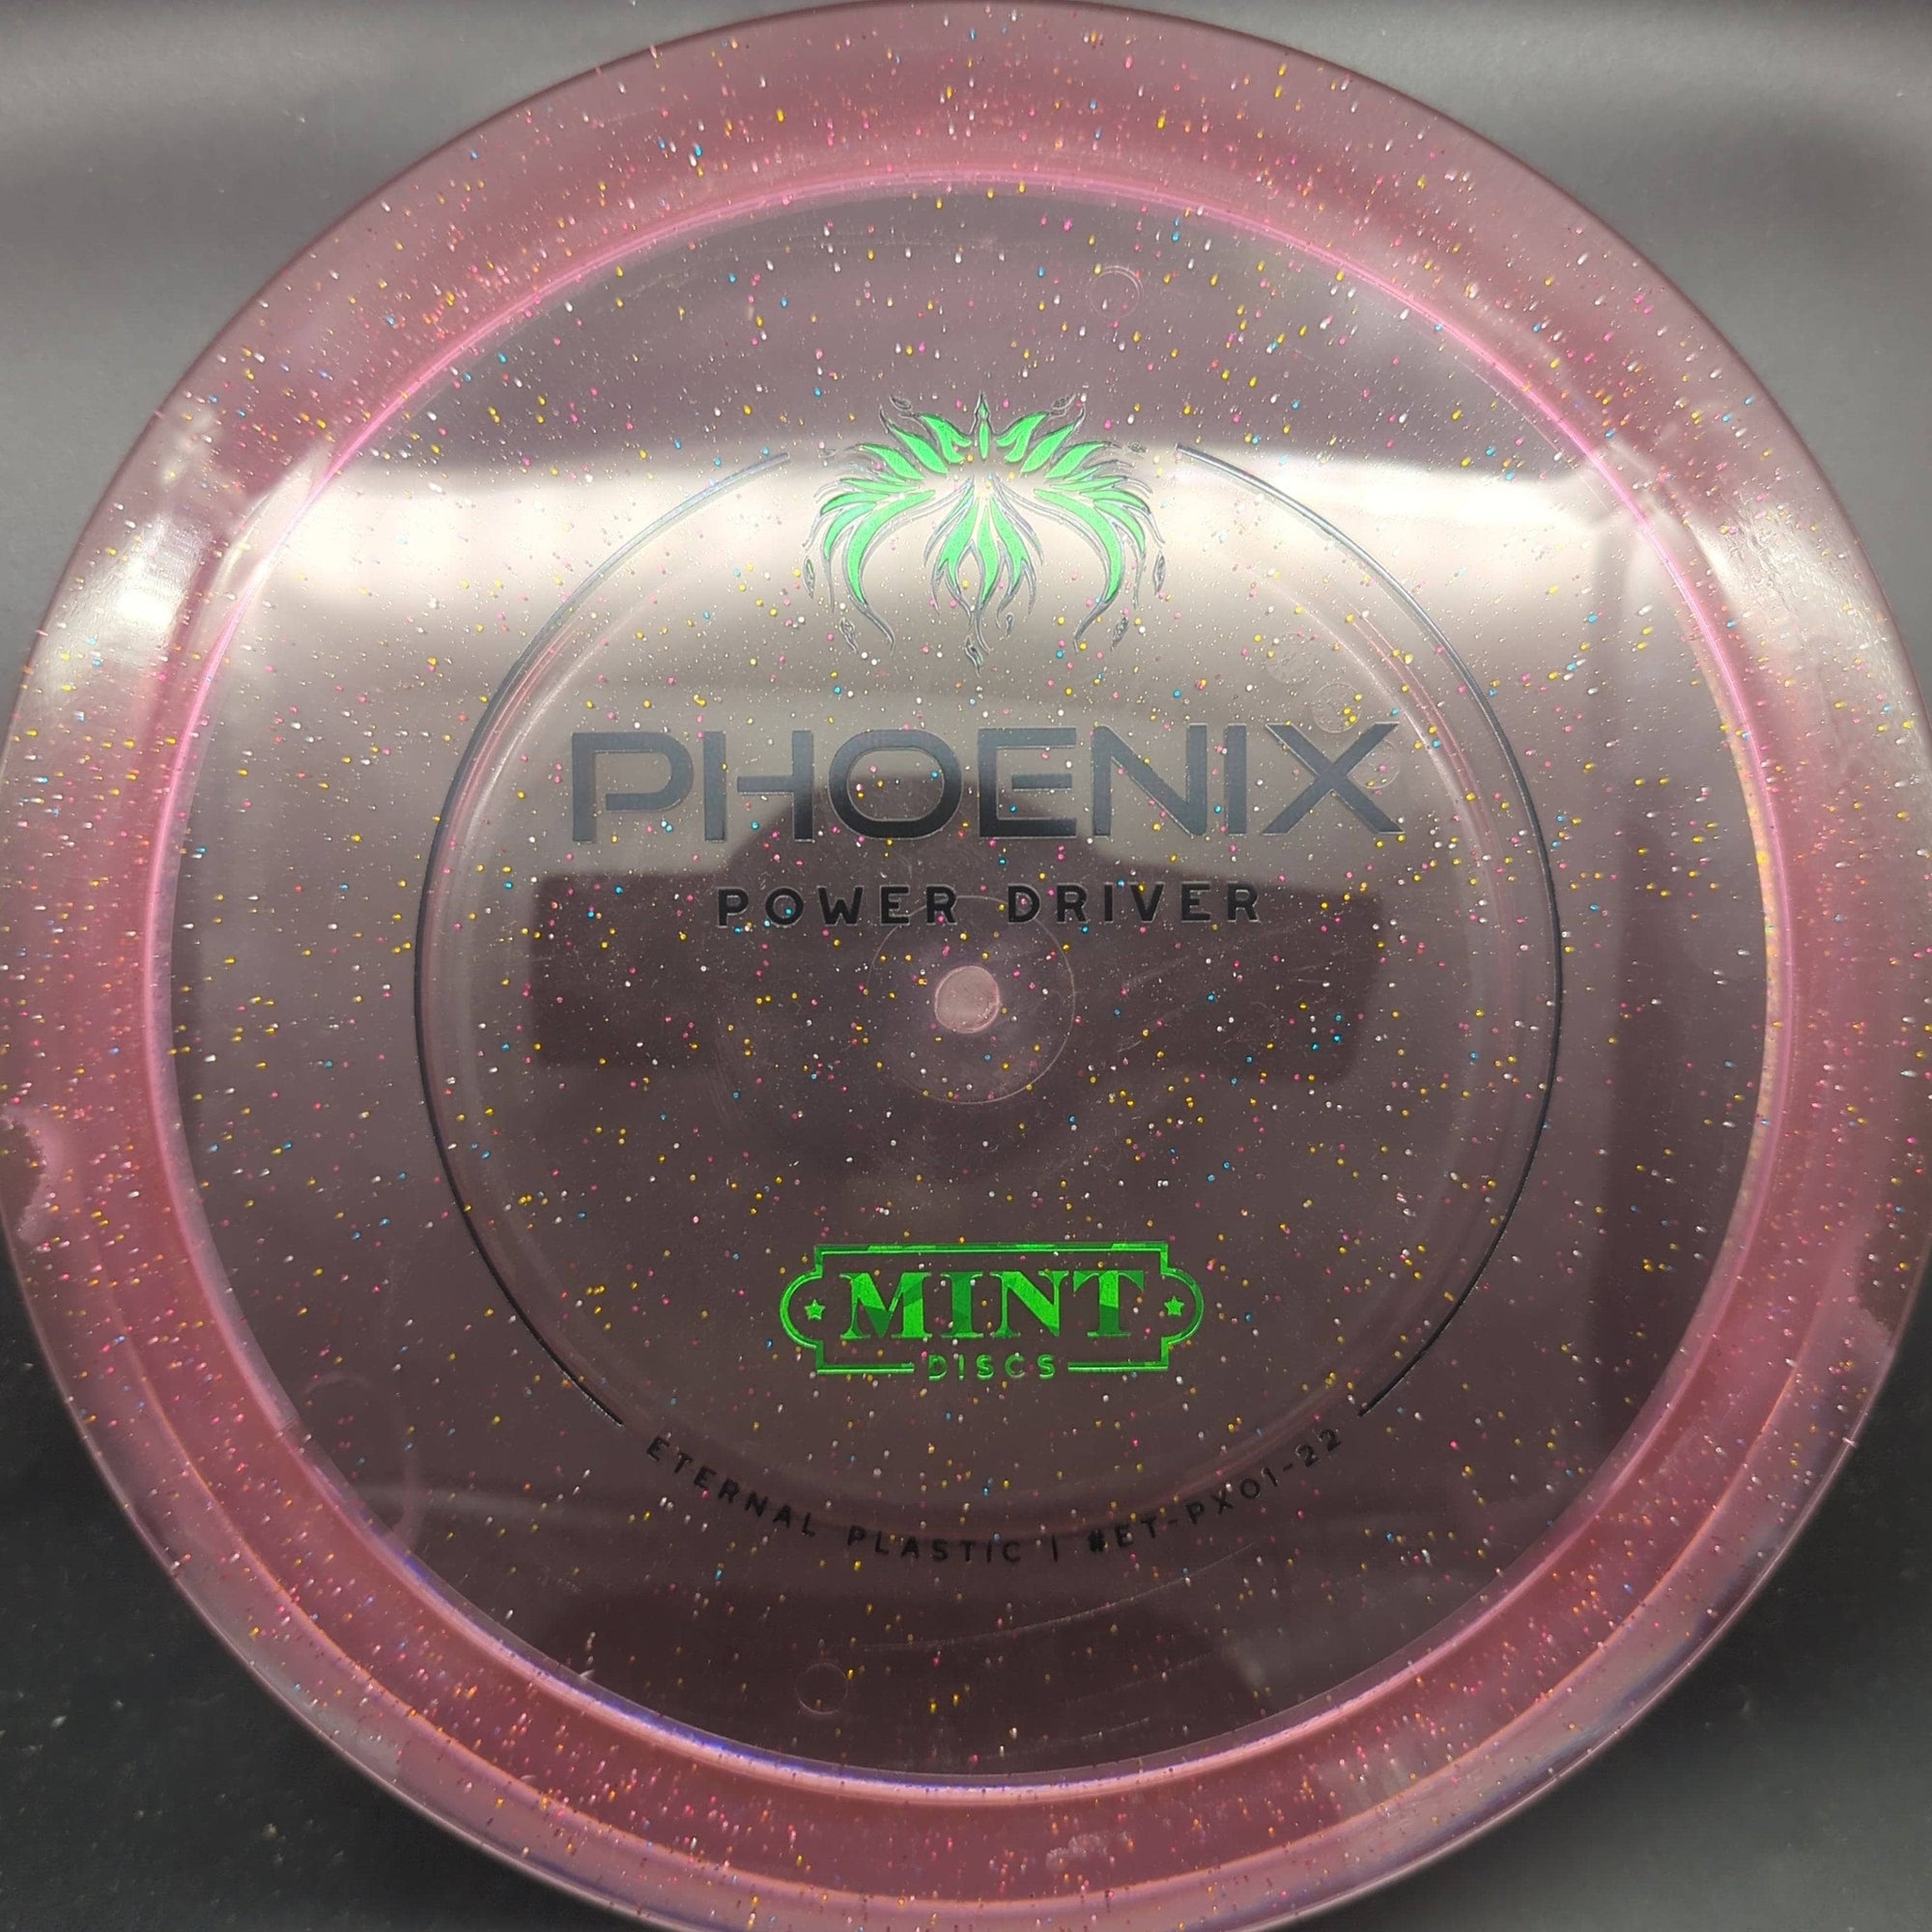 Mint Discs Fairway Driver Phoenix - Eternal Plastic